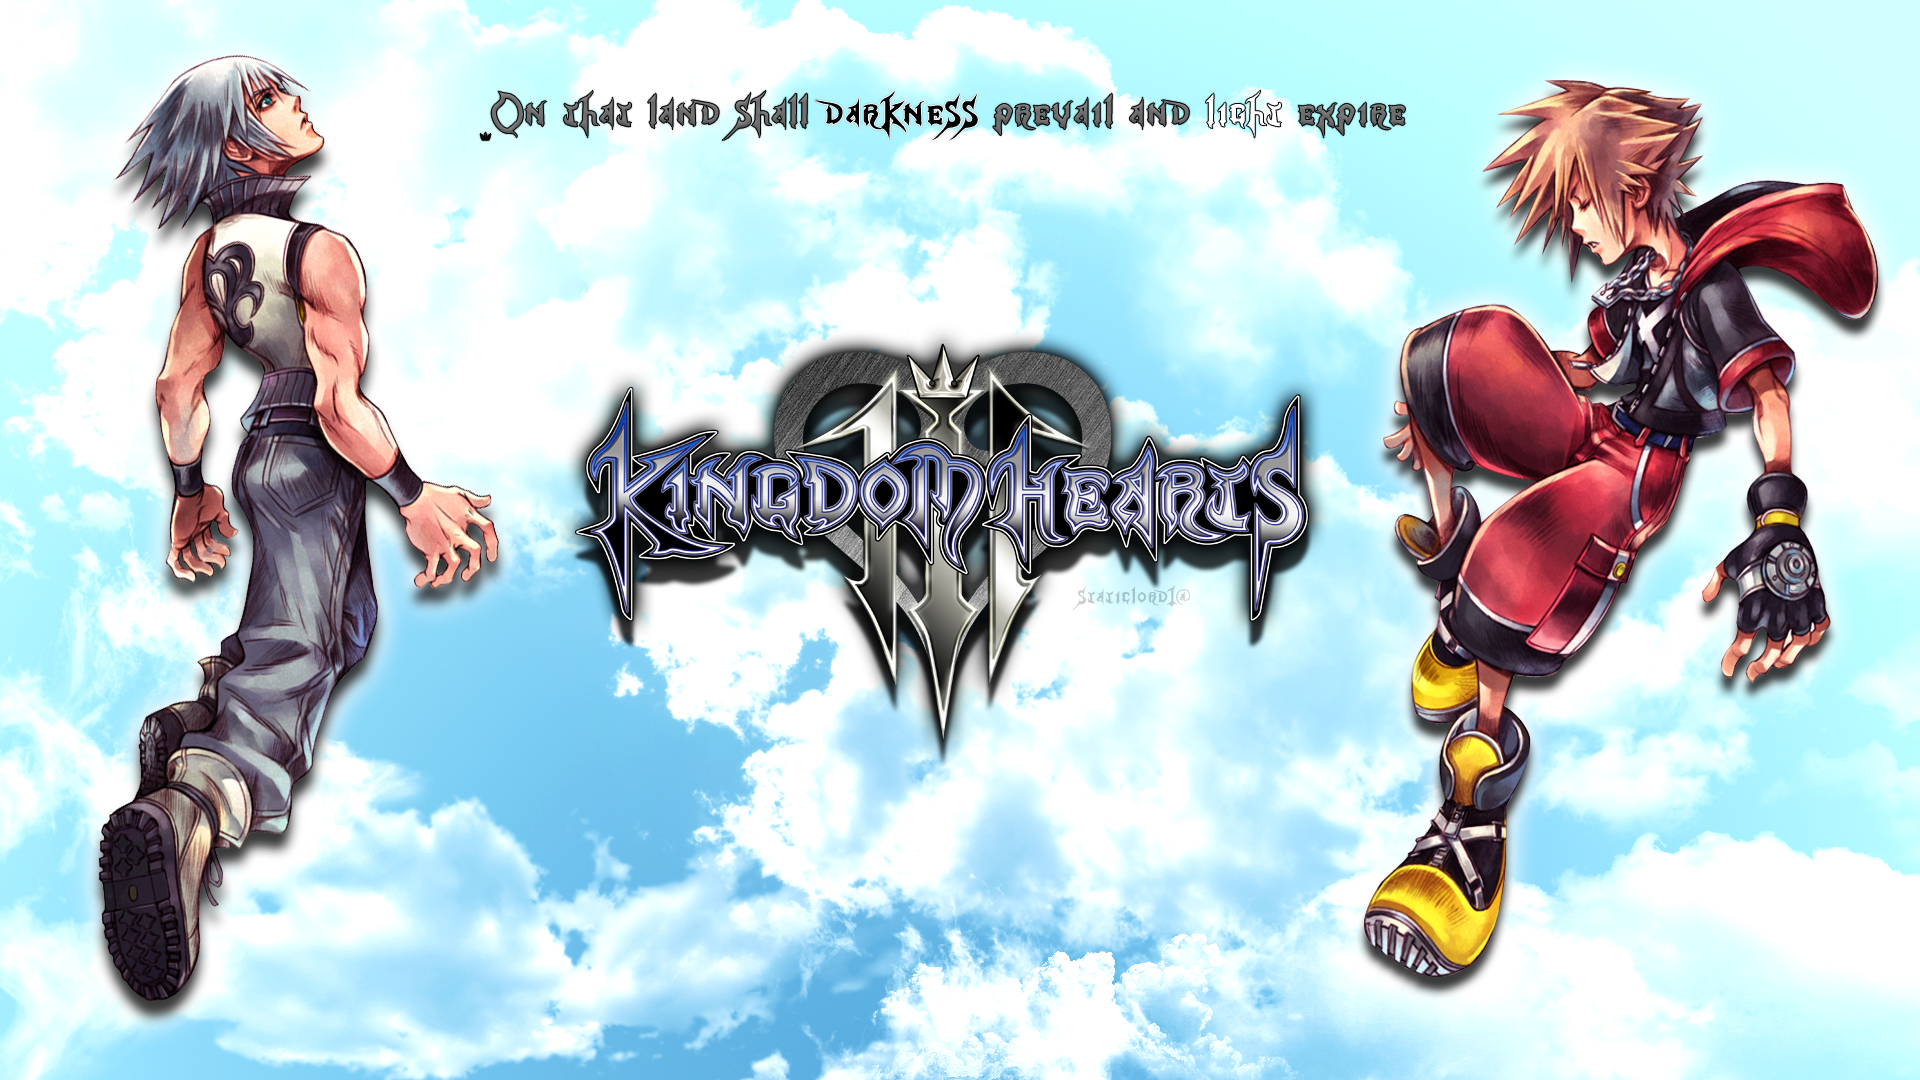 Kingdom hearts 3 Sora/Riku Wallpaper by static989 on DeviantArt